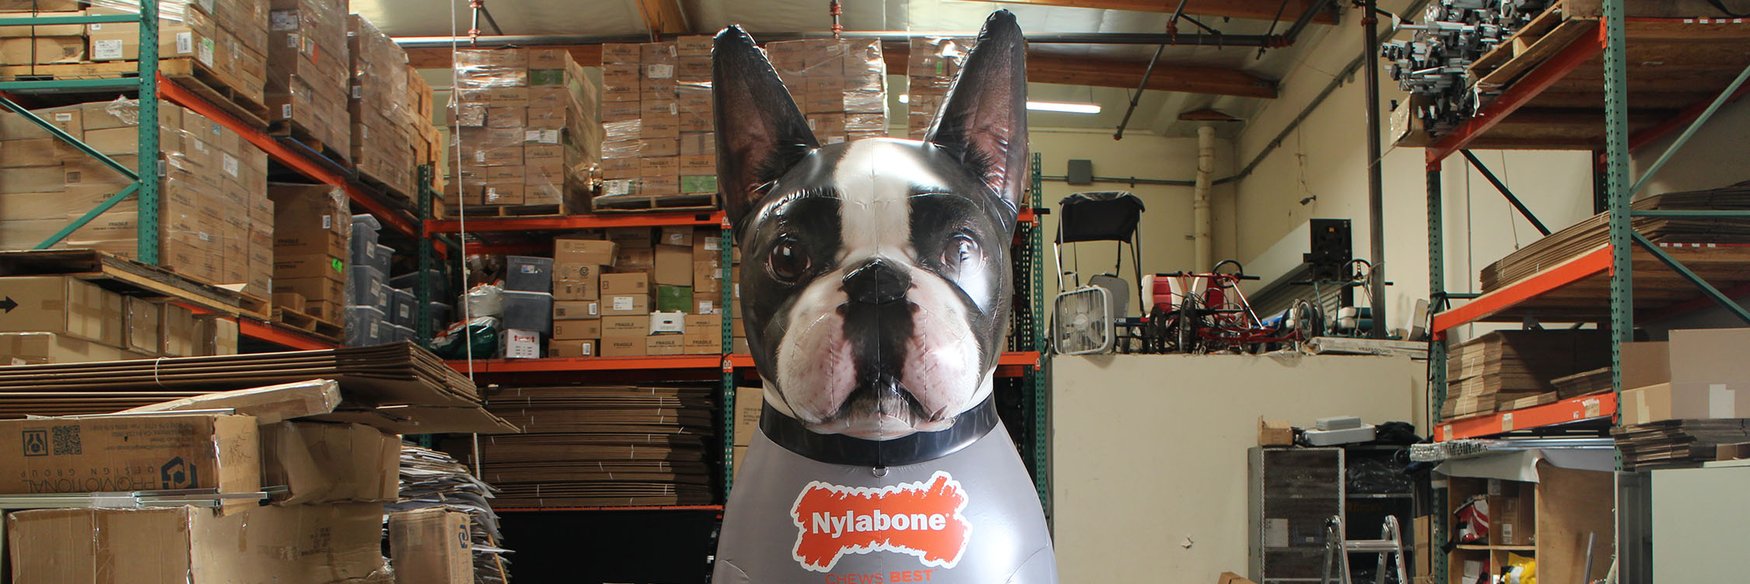 nylabone-dog-inflatable